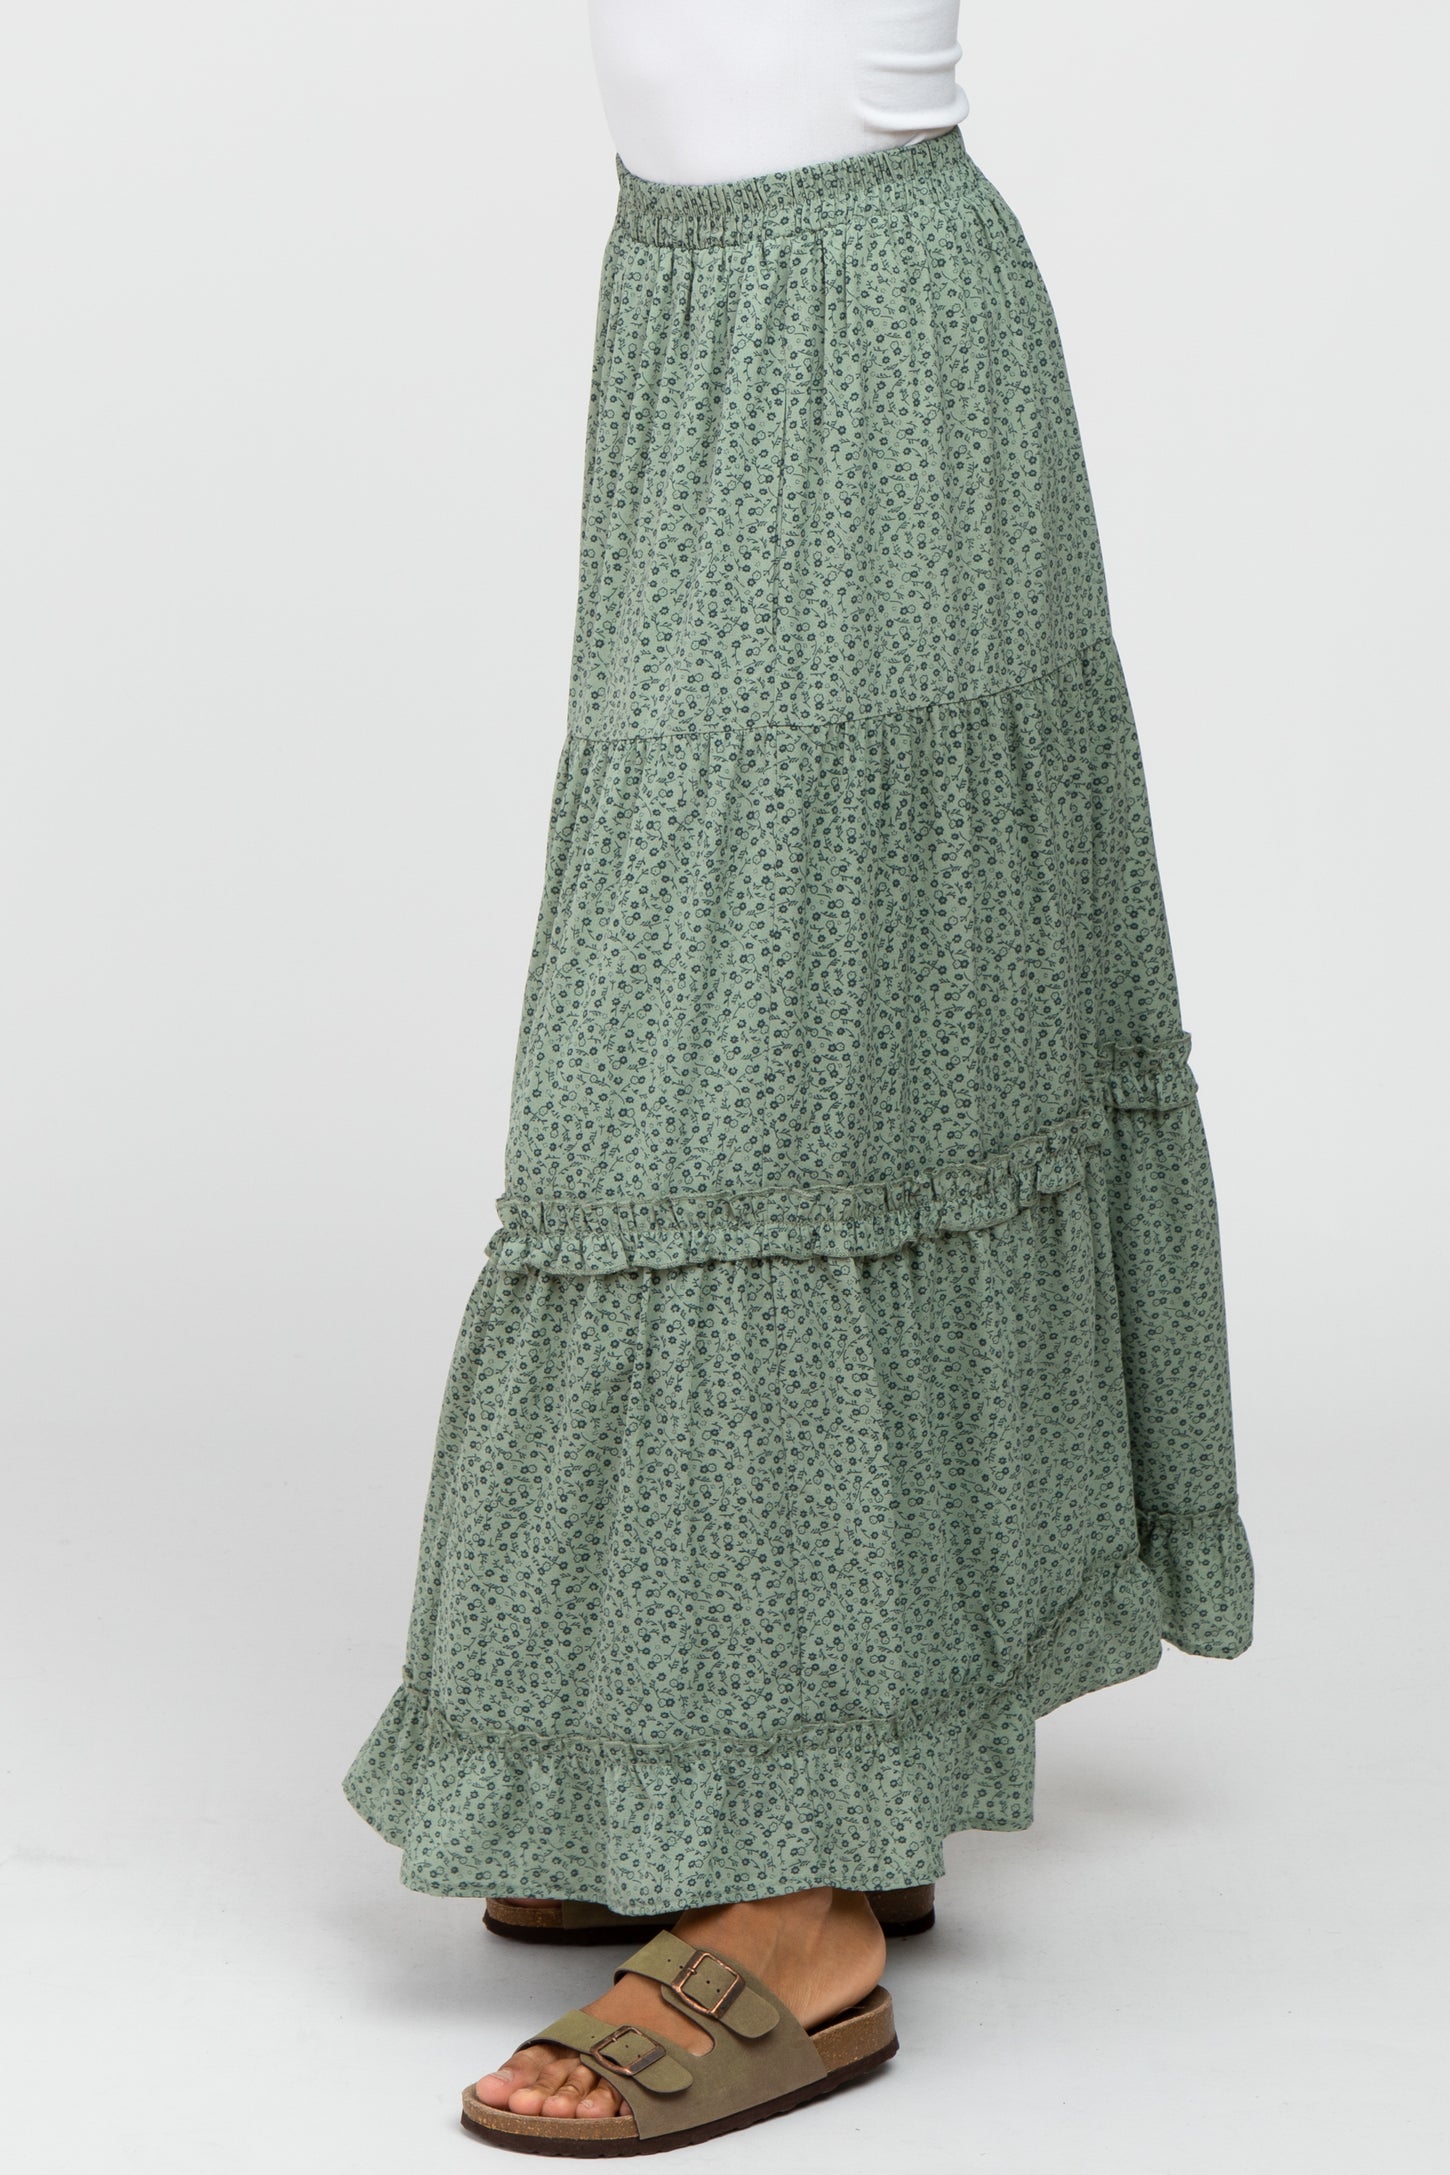 Mint Green Floral Chiffon Ruffle Tiered Maxi Skirt